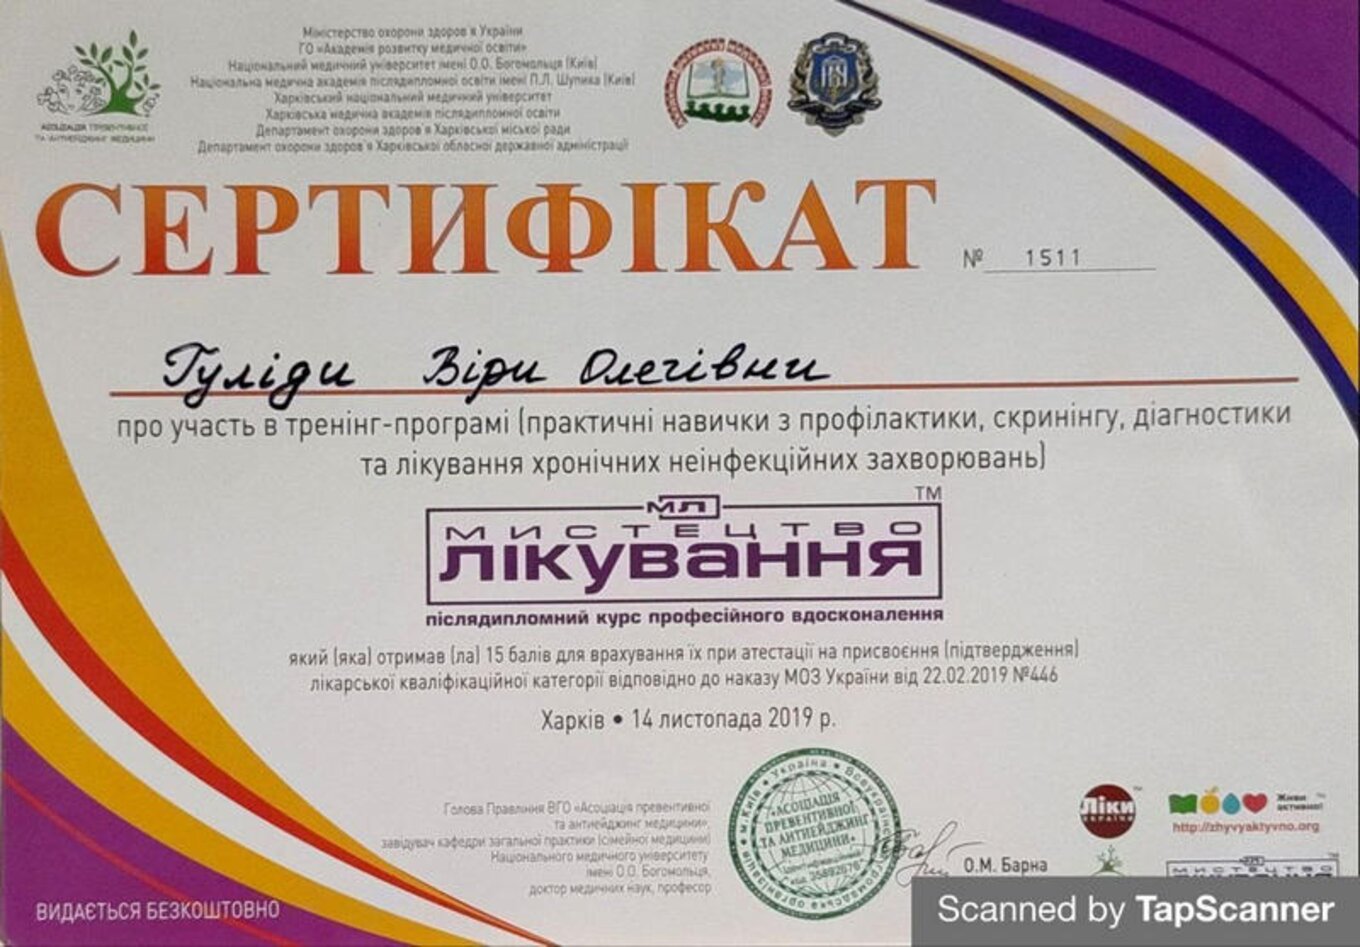 certificates/gulida-vira-olegivna/erc-cert-gulida-12.jpg